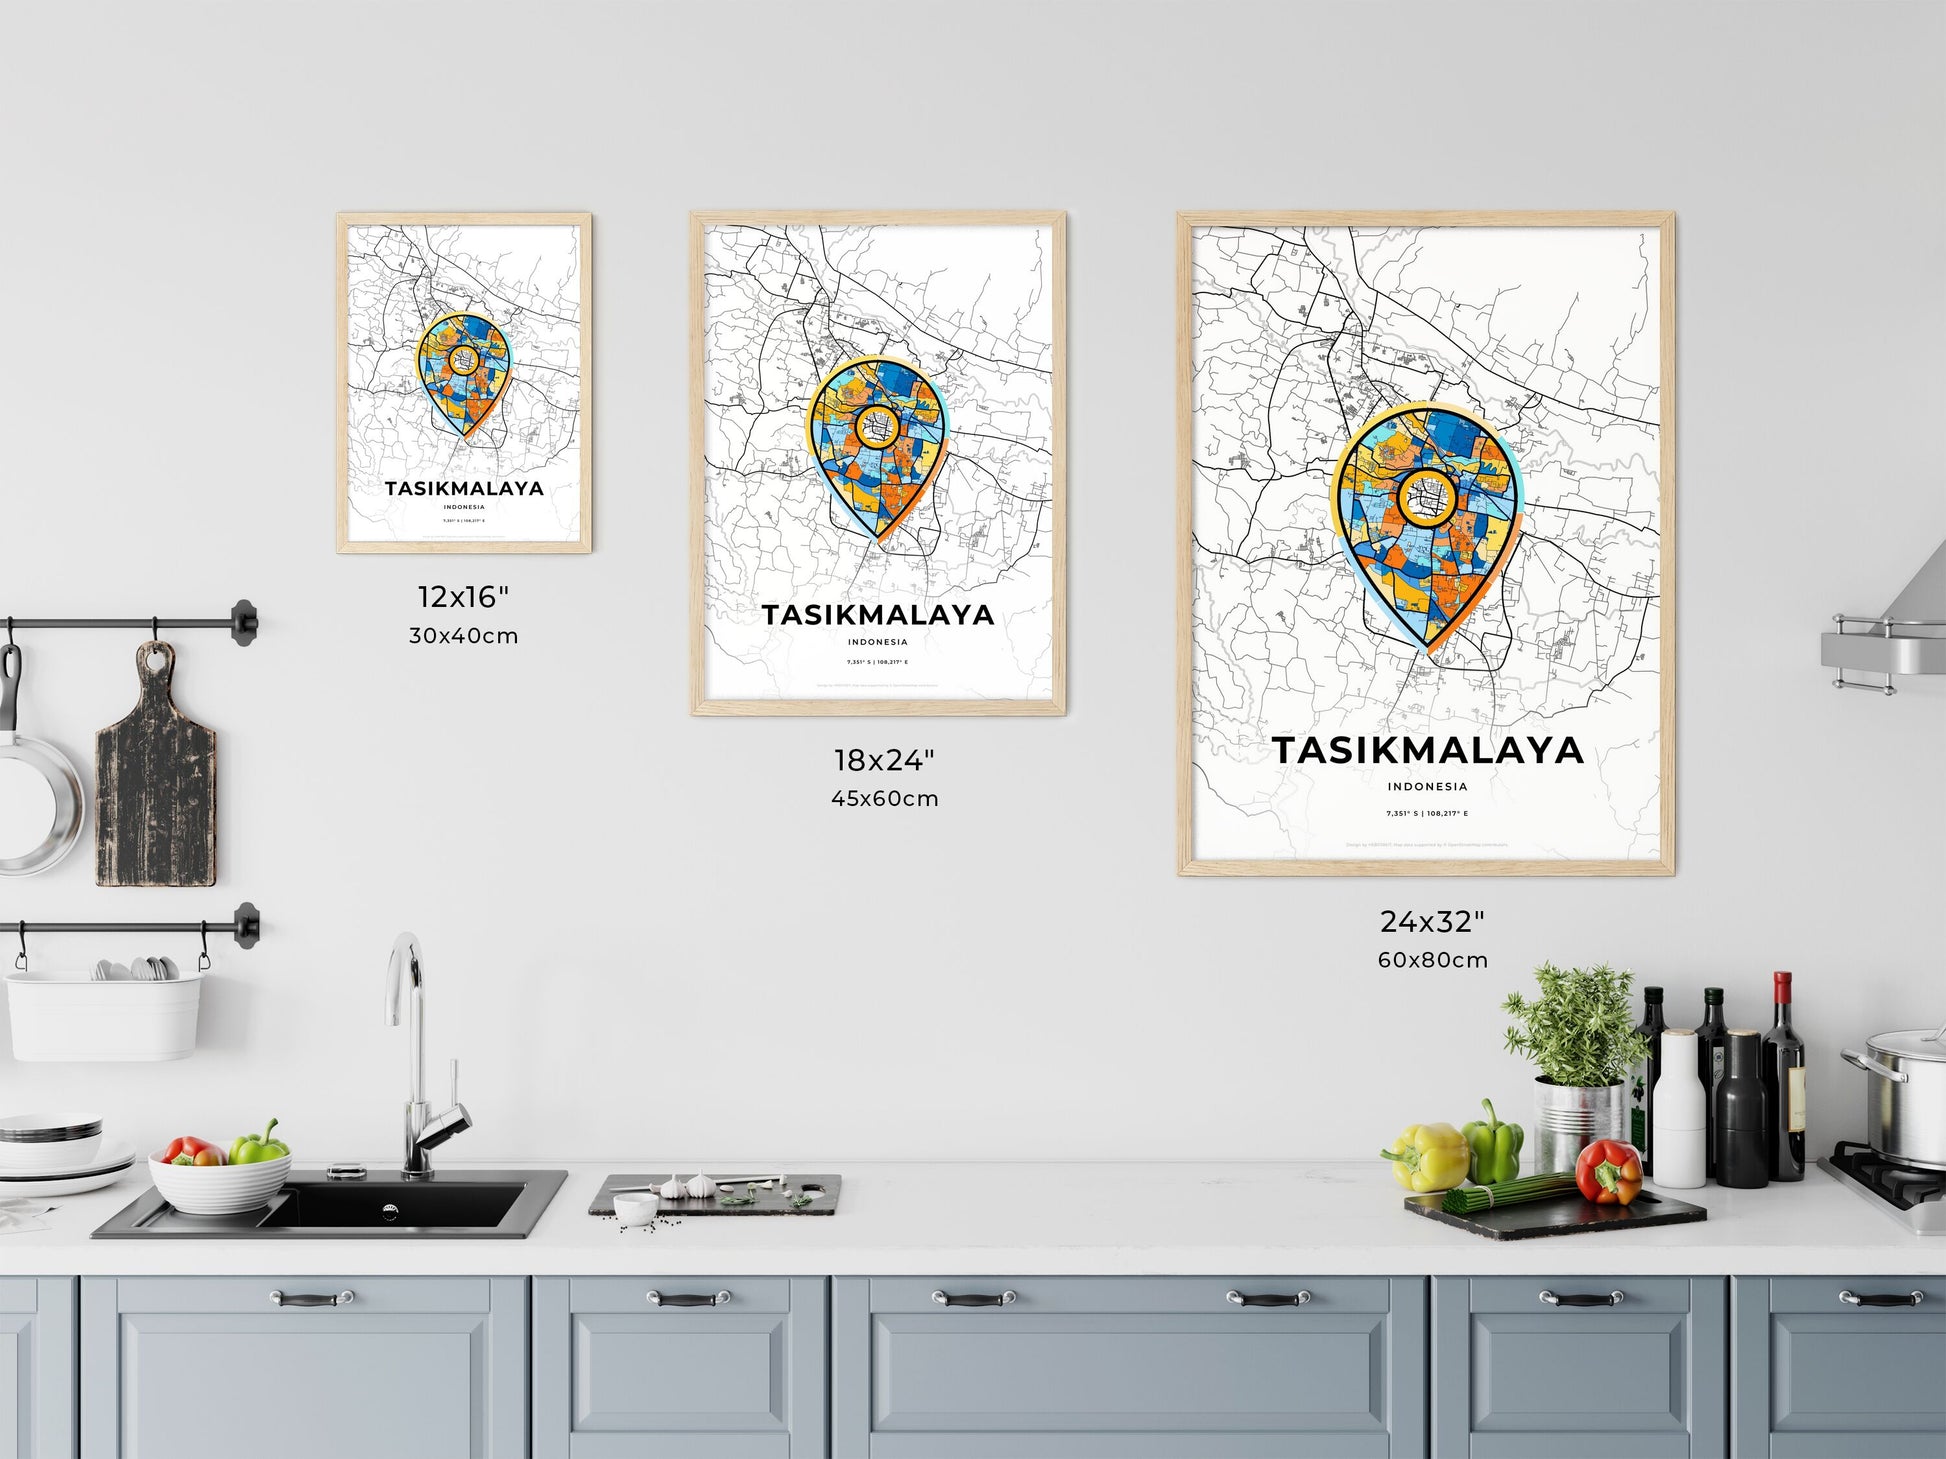 TASIKMALAYA INDONESIA minimal art map with a colorful icon.